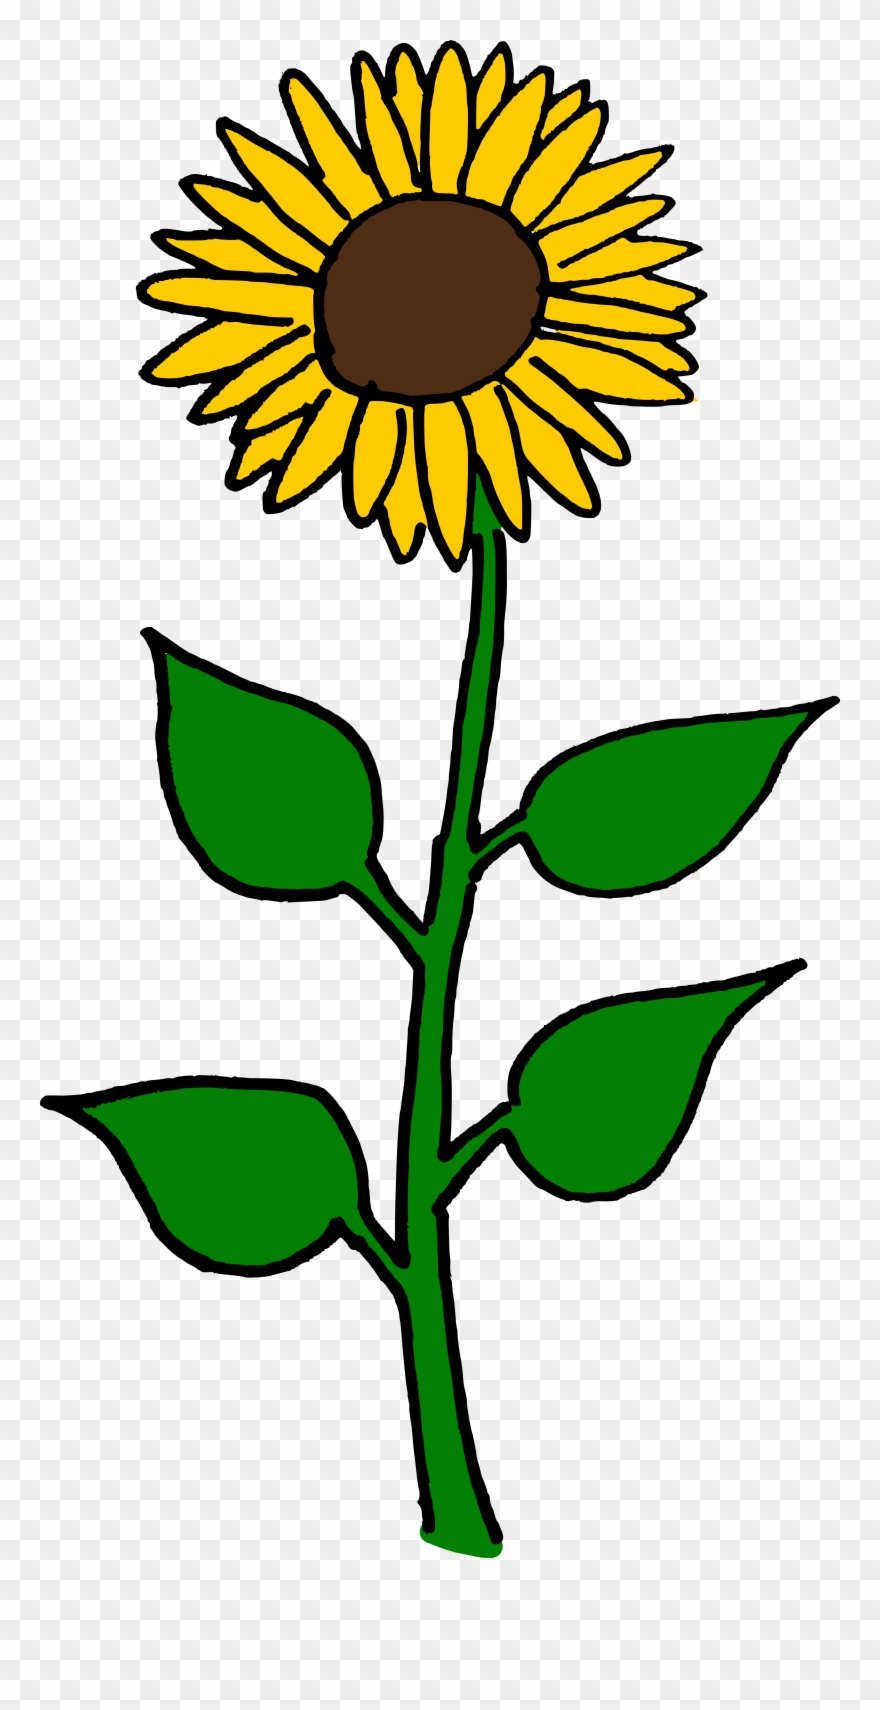 Flower clipart sunflower.